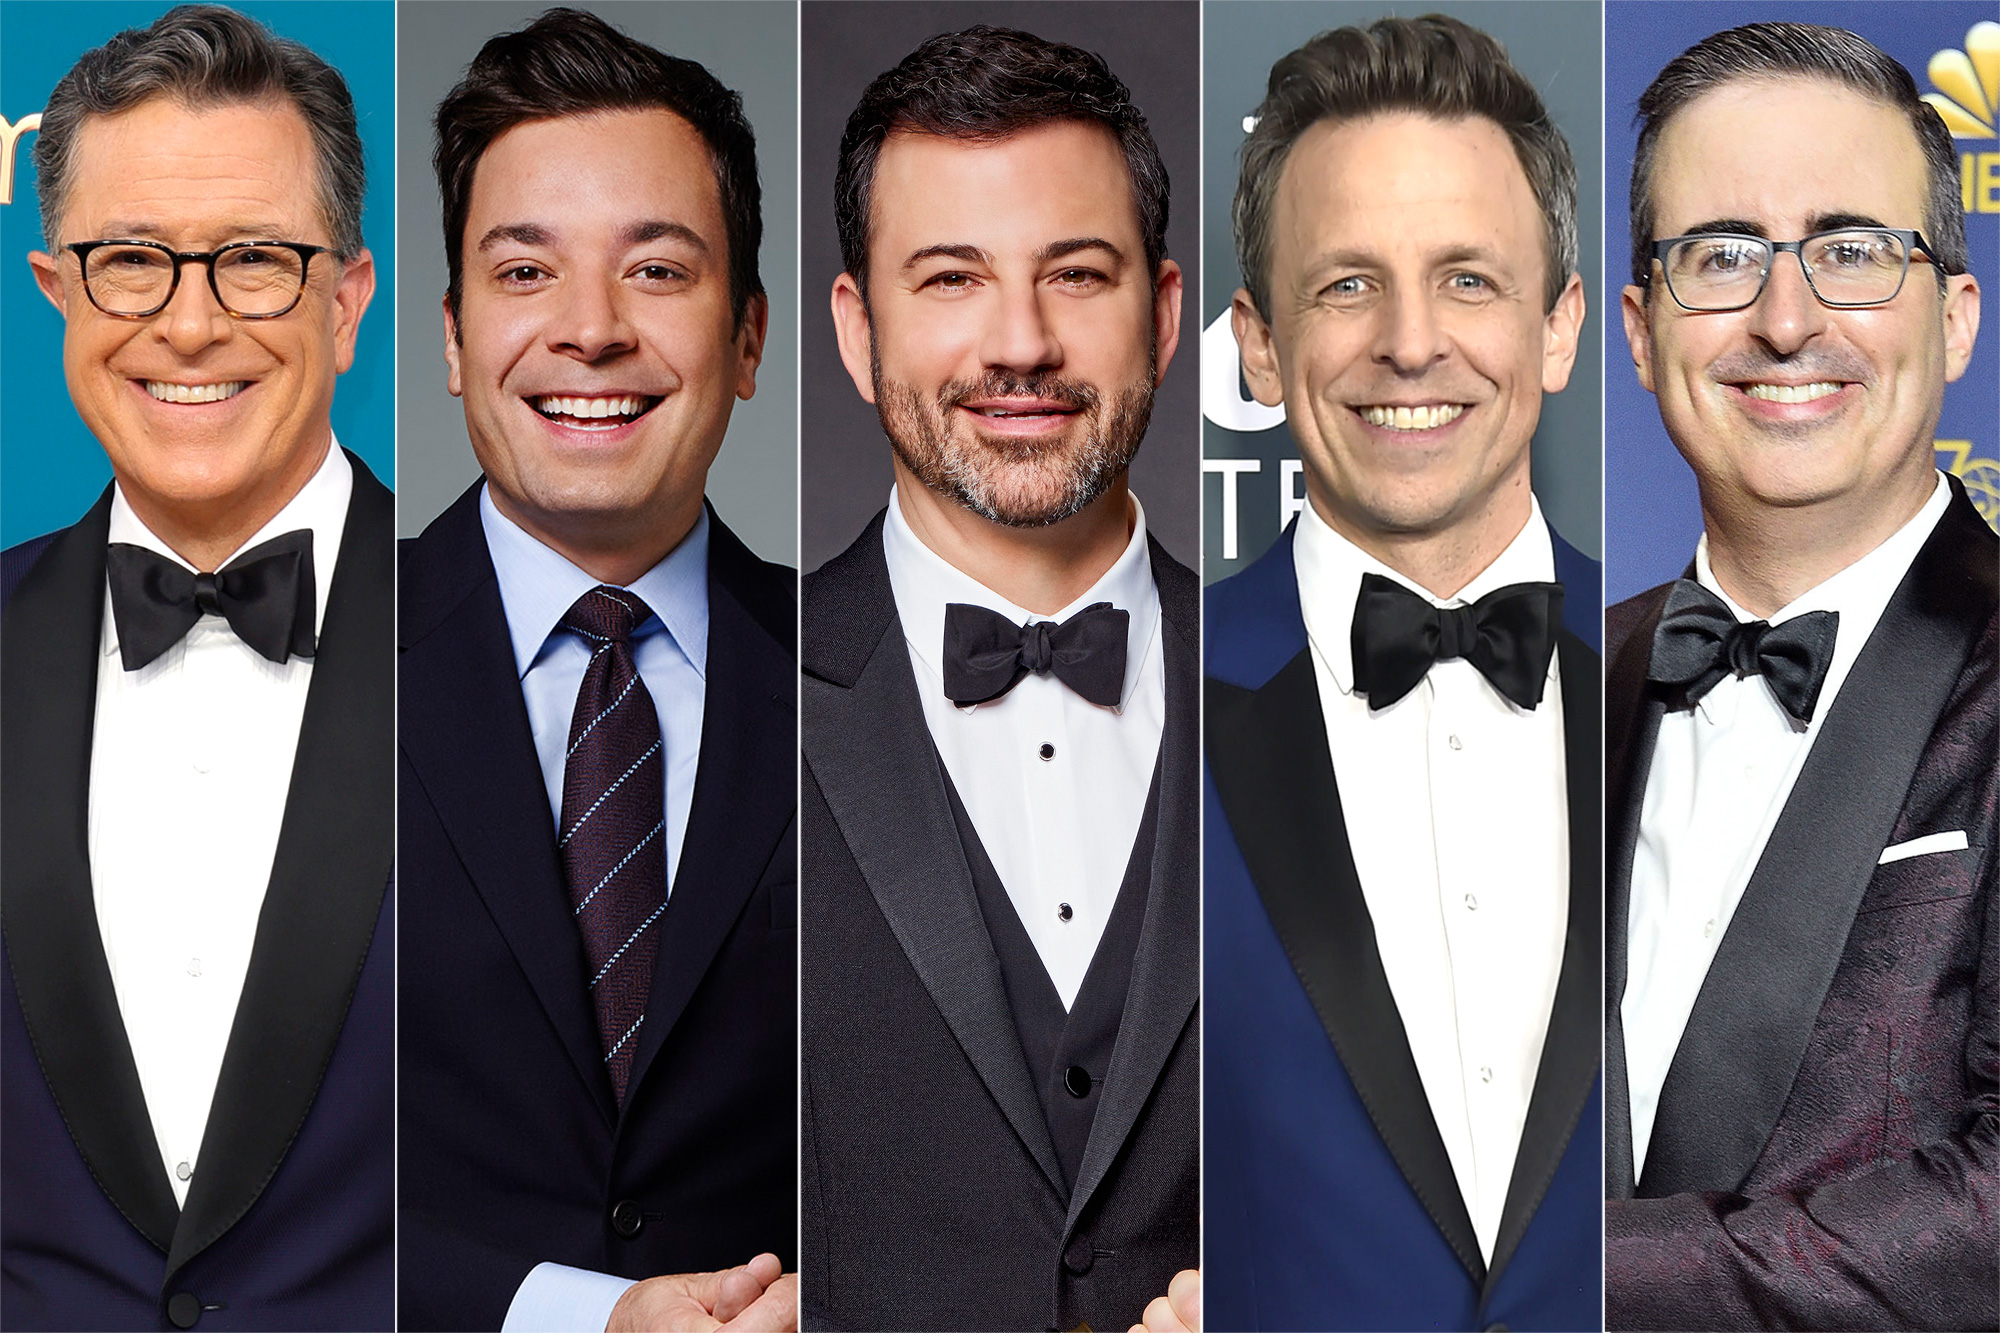 Stephen Colbert, Jimmy Fallon, Jimmy Kimmel, Seth Meyers, and John Oliver